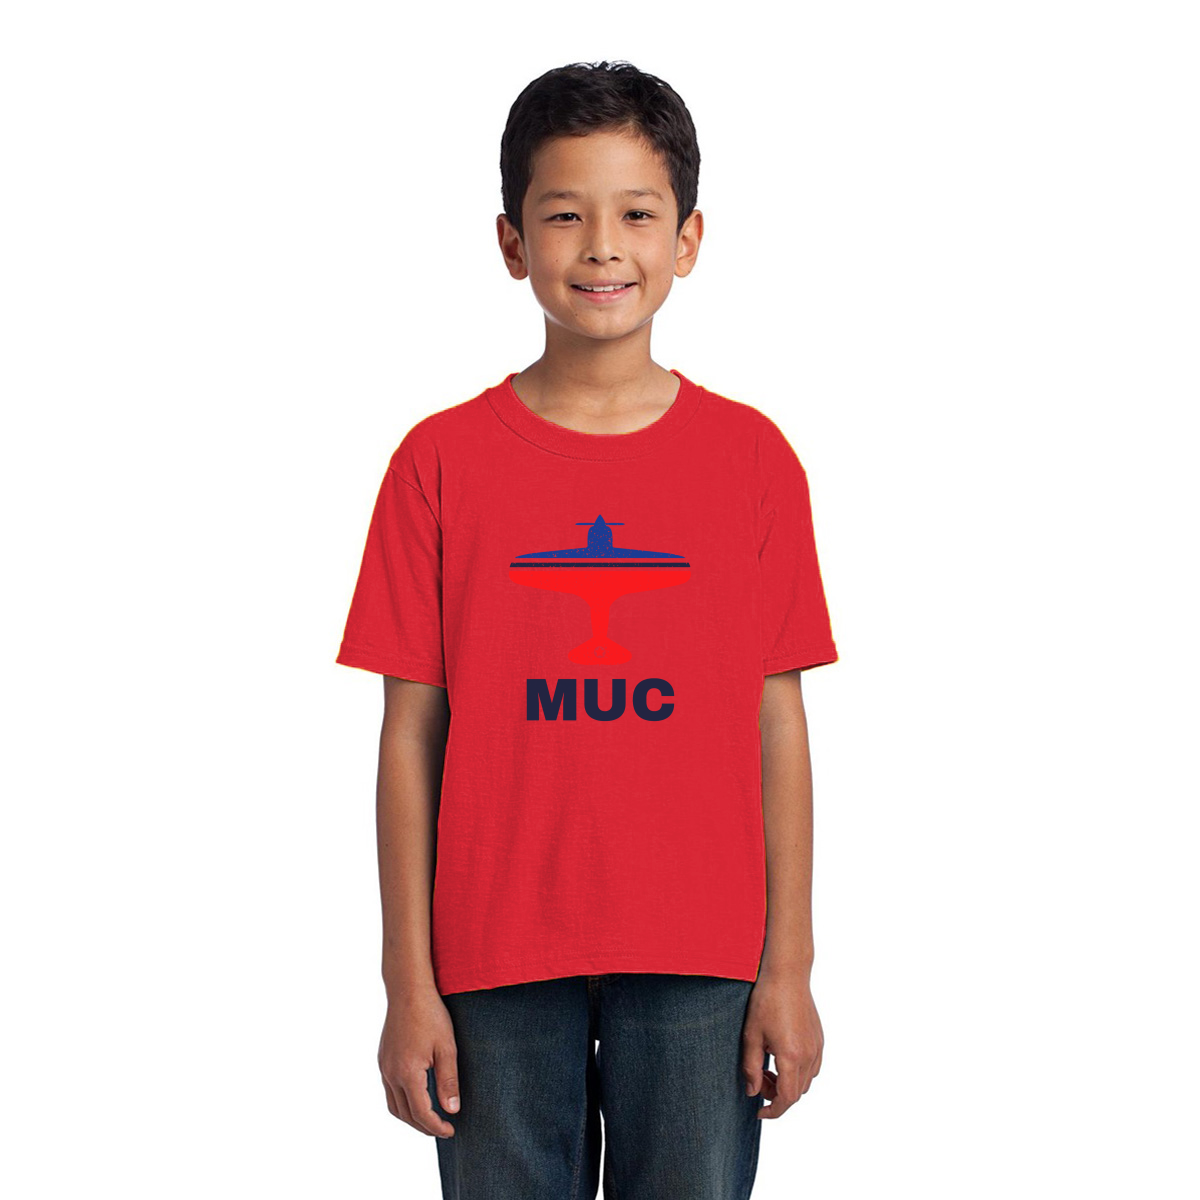 Fly Munich MUC Airport Kids T-shirt | Red